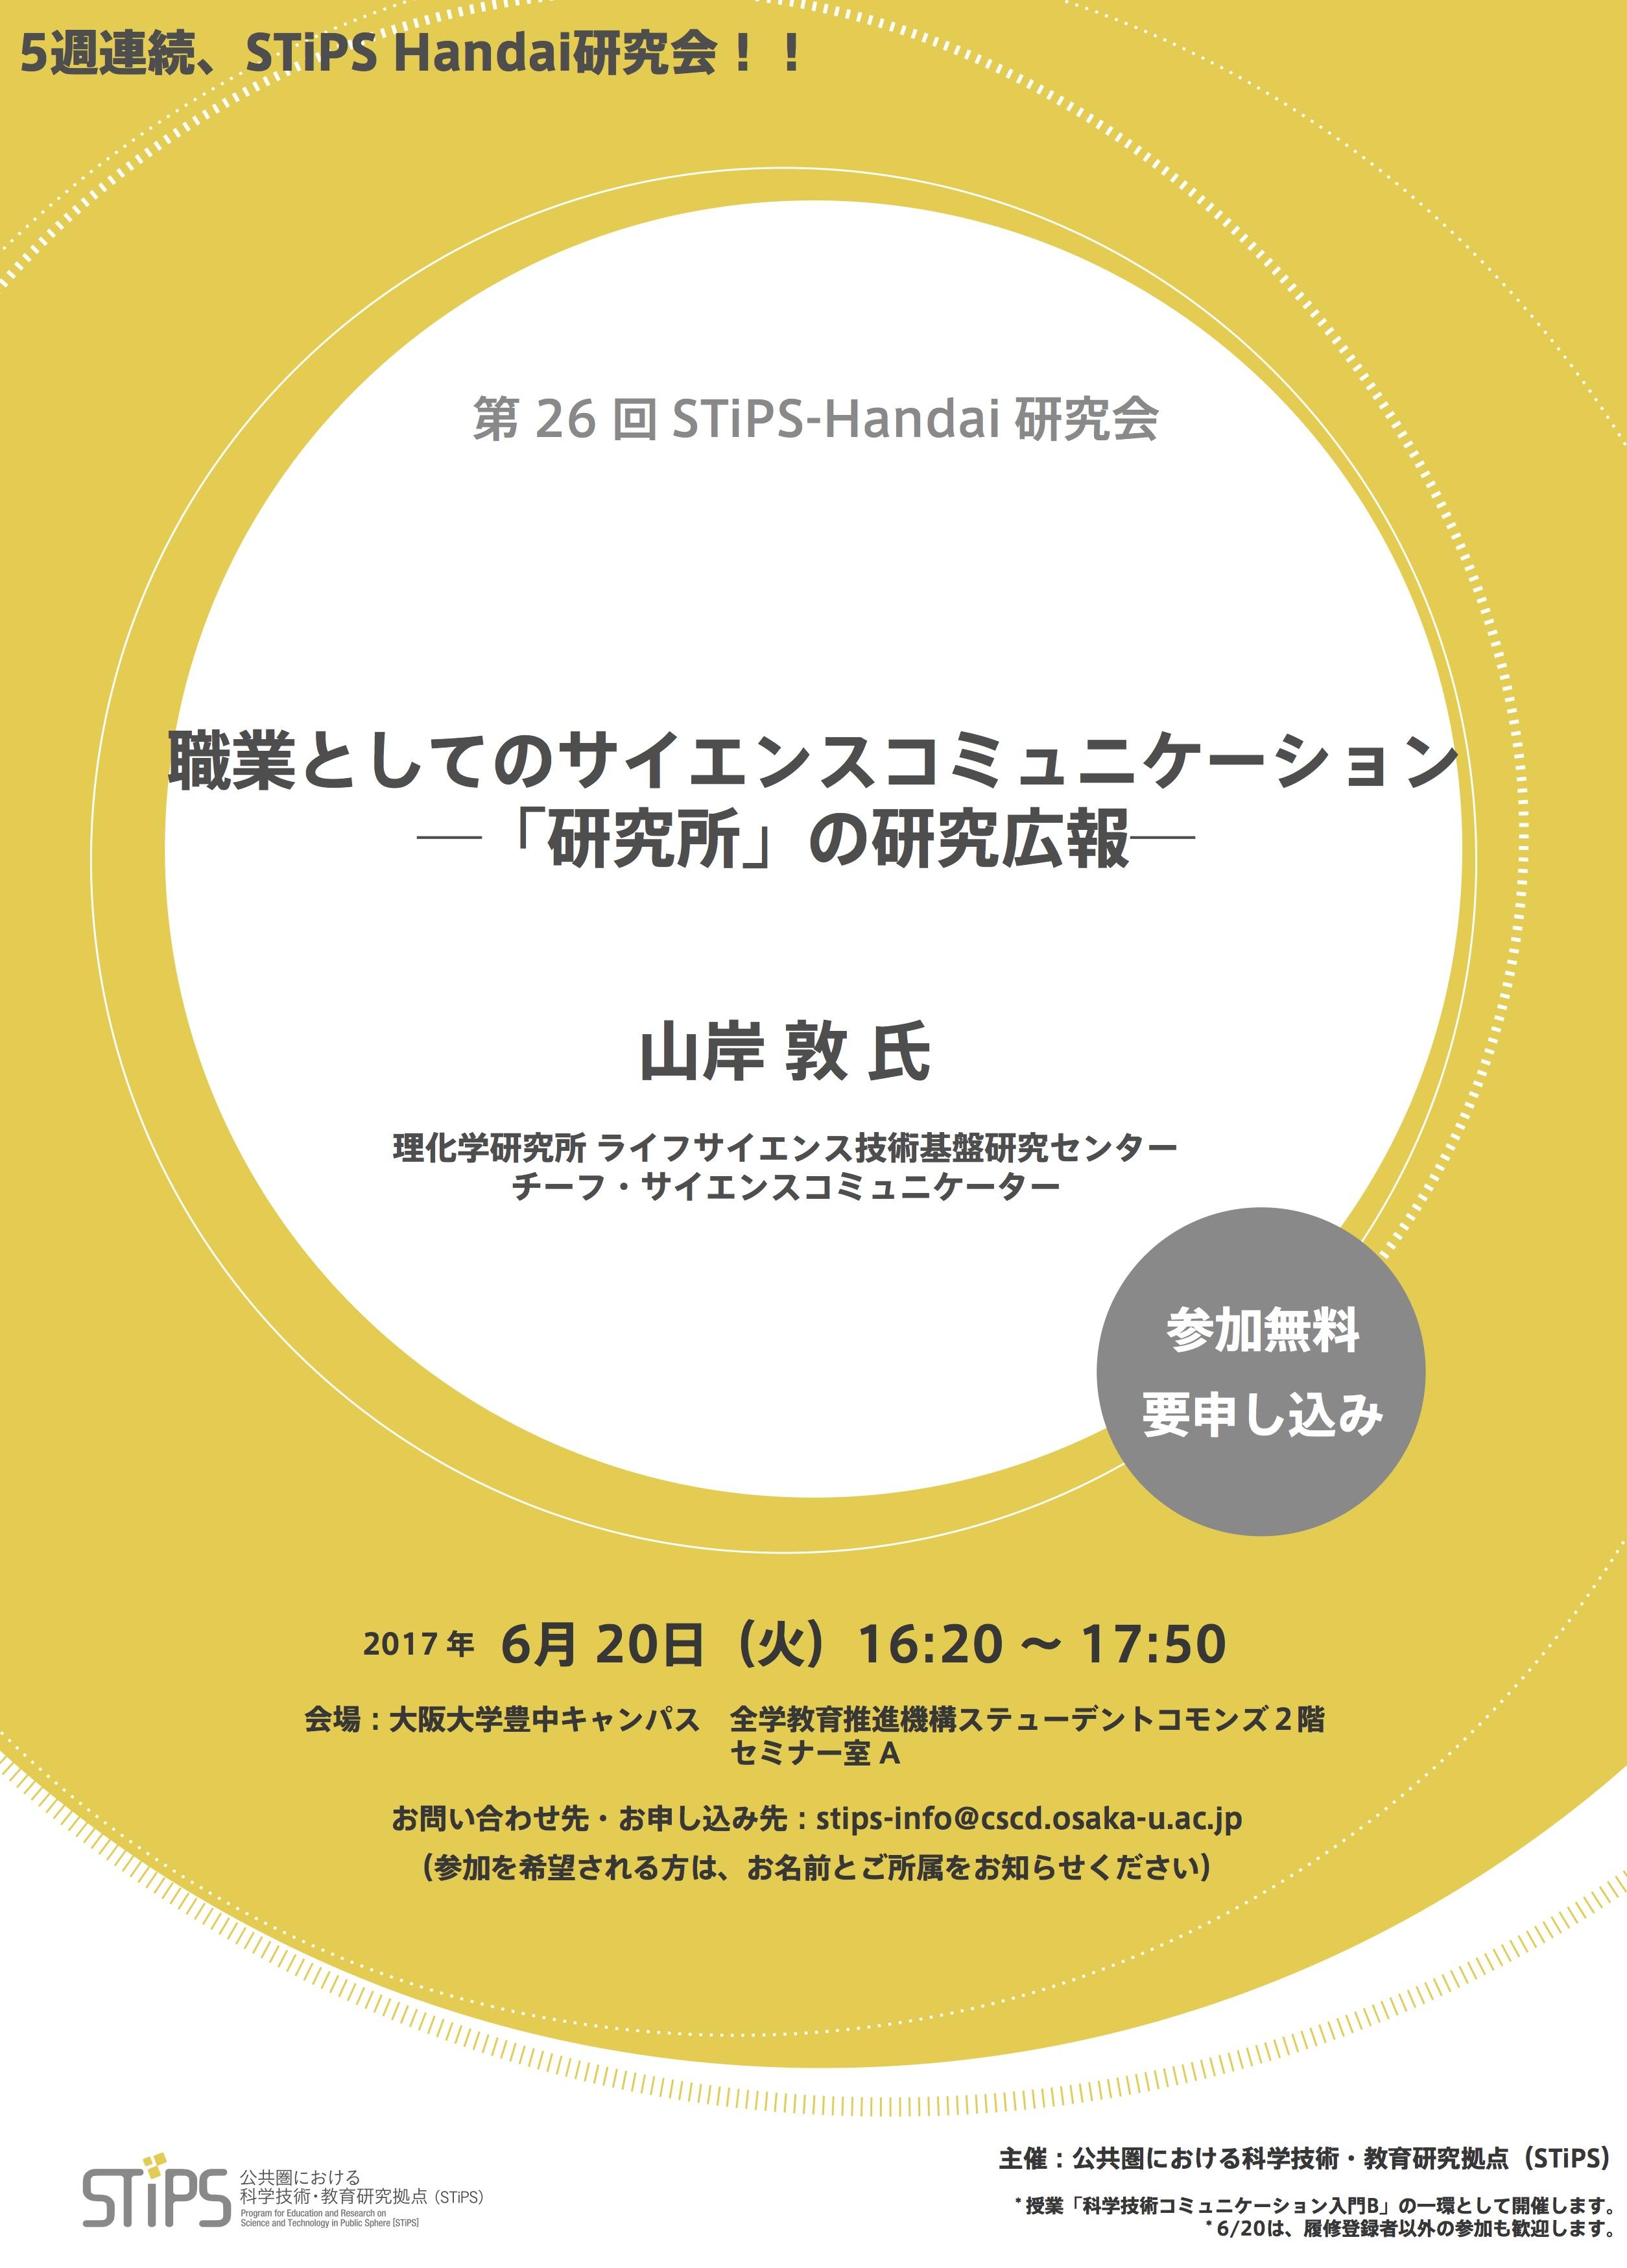 http://scirex.grips.ac.jp/events/mizumachi/STiPS-Handai_for170620.jpg